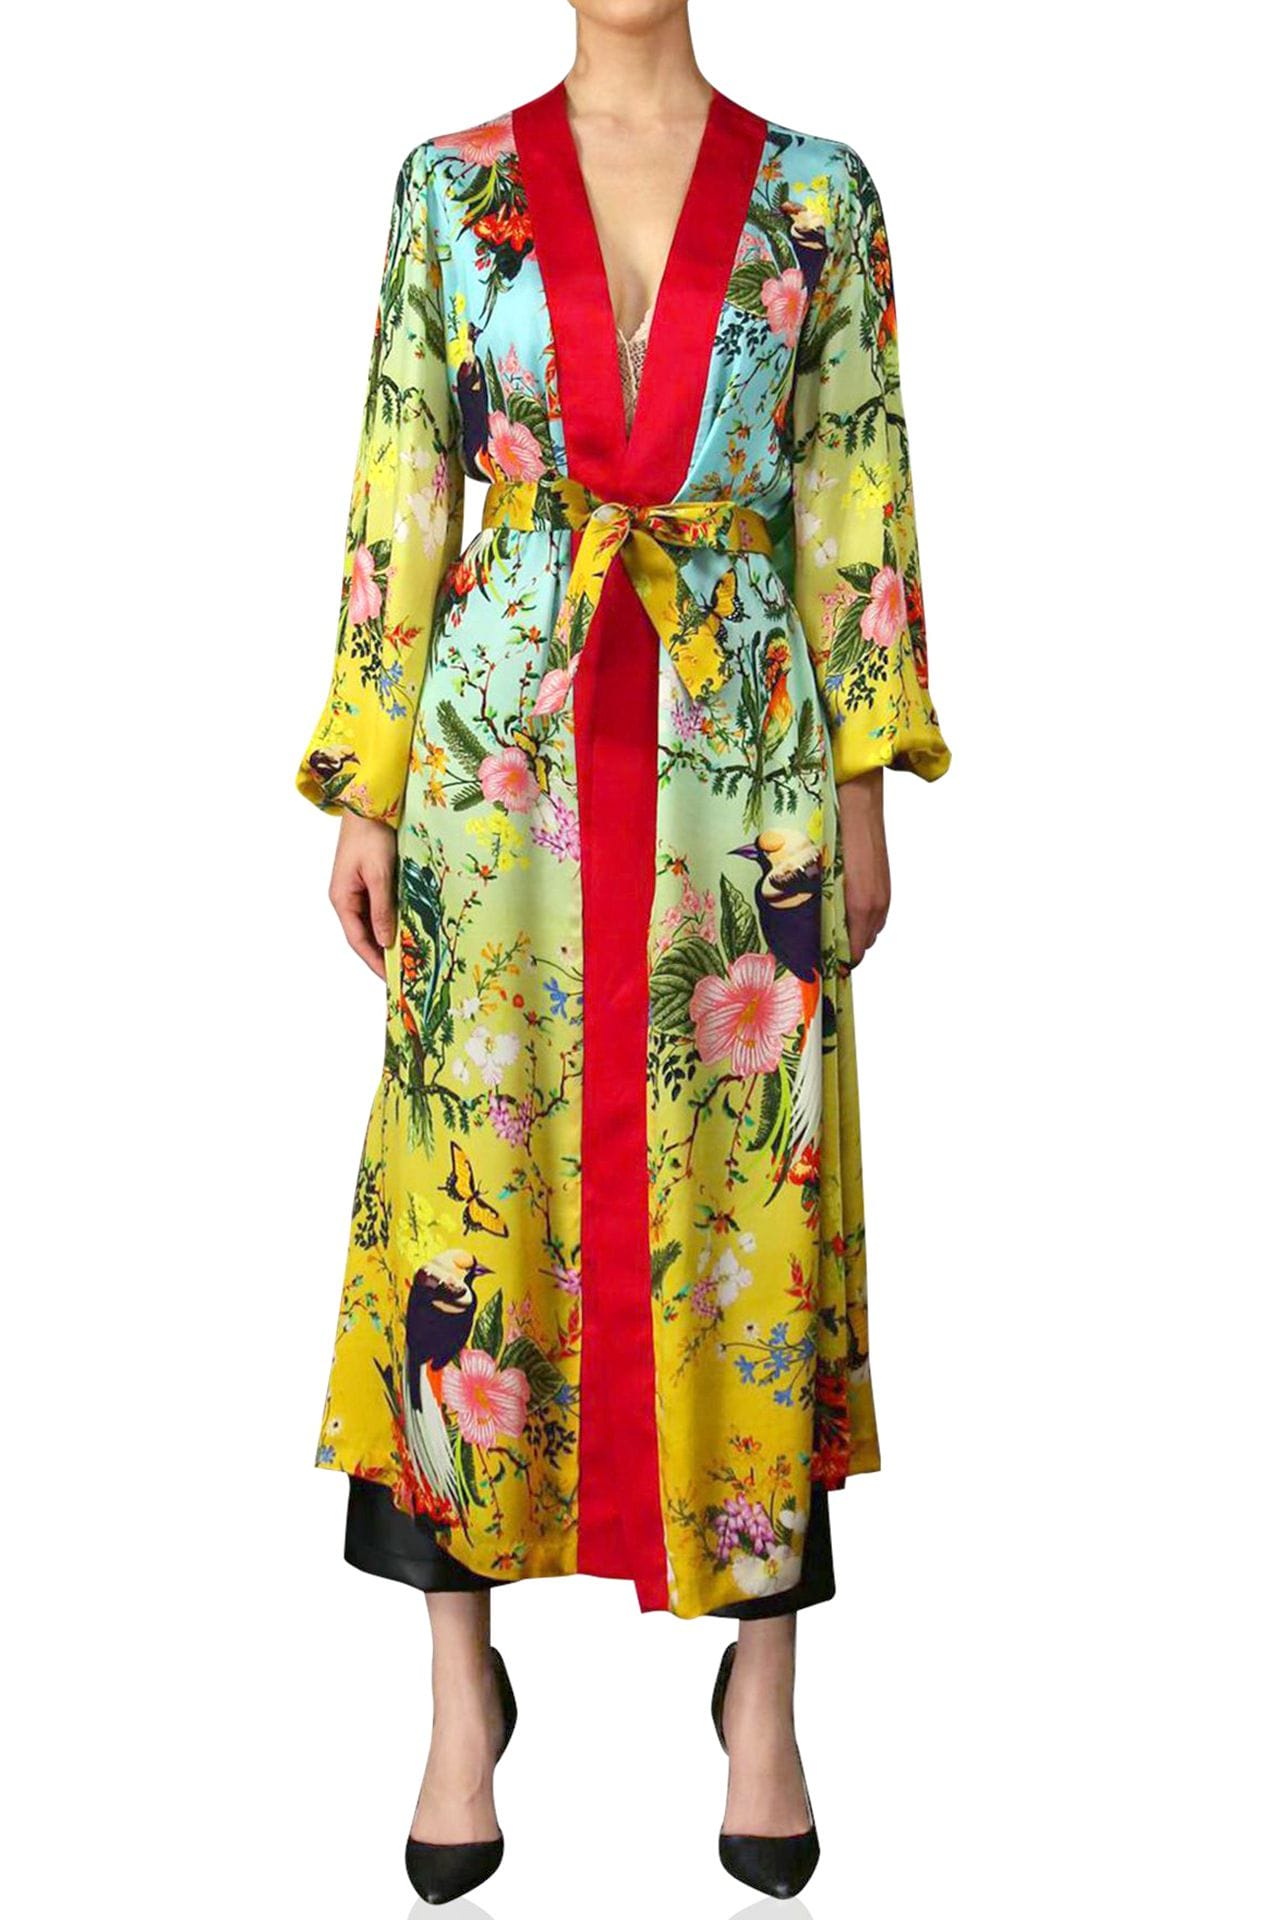 "Kyle X Shahida" "silk green robe" "womens long kimono robe" "silk yellow robe" "plus size kimono" "womens long kimono"